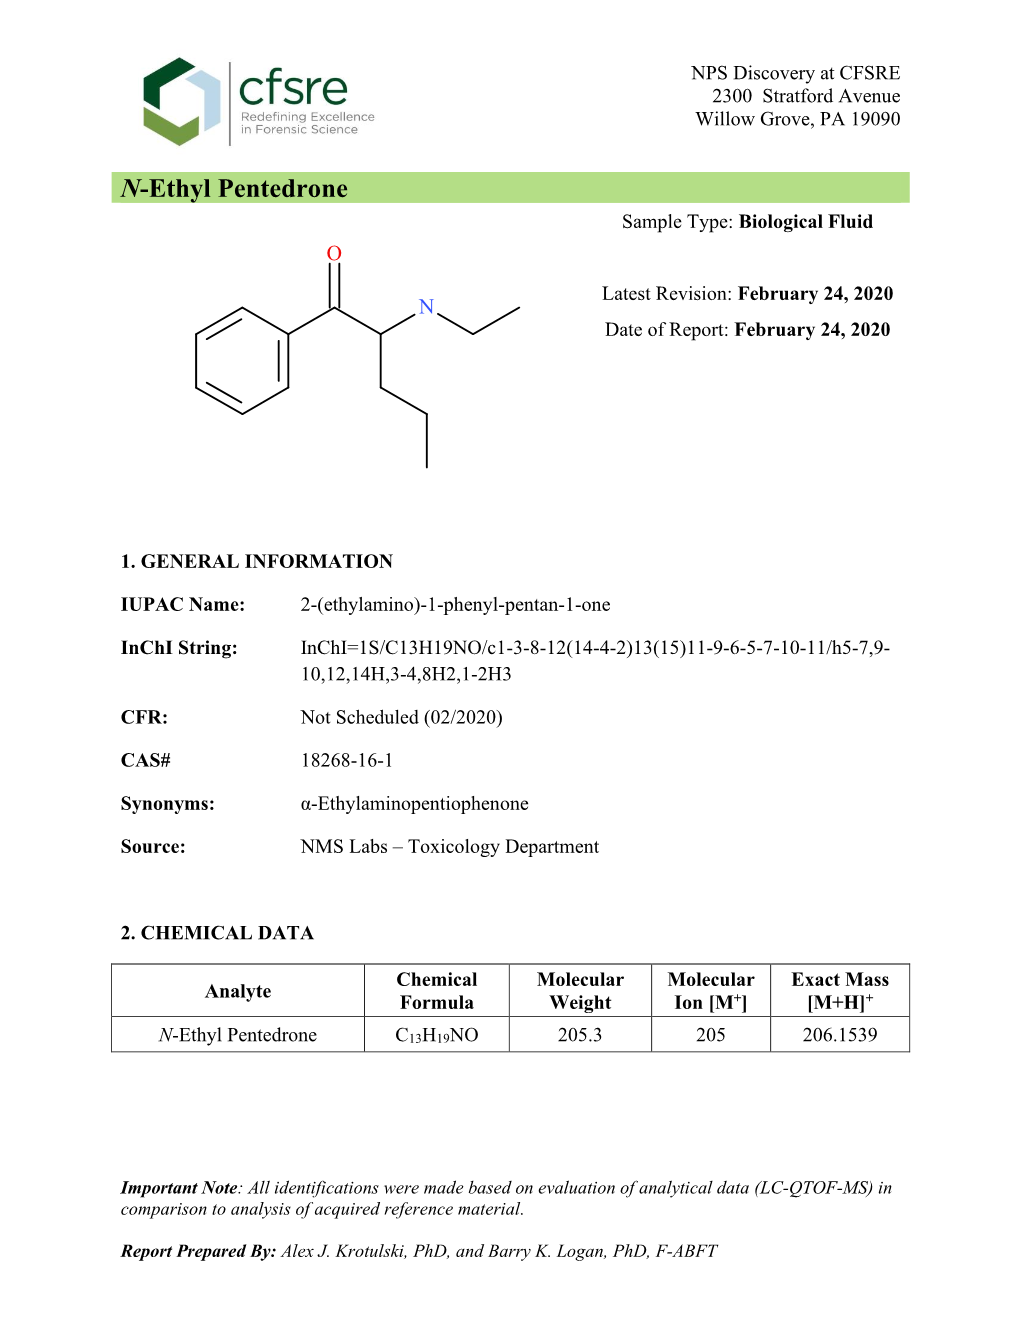 N-Ethyl Pentedrone